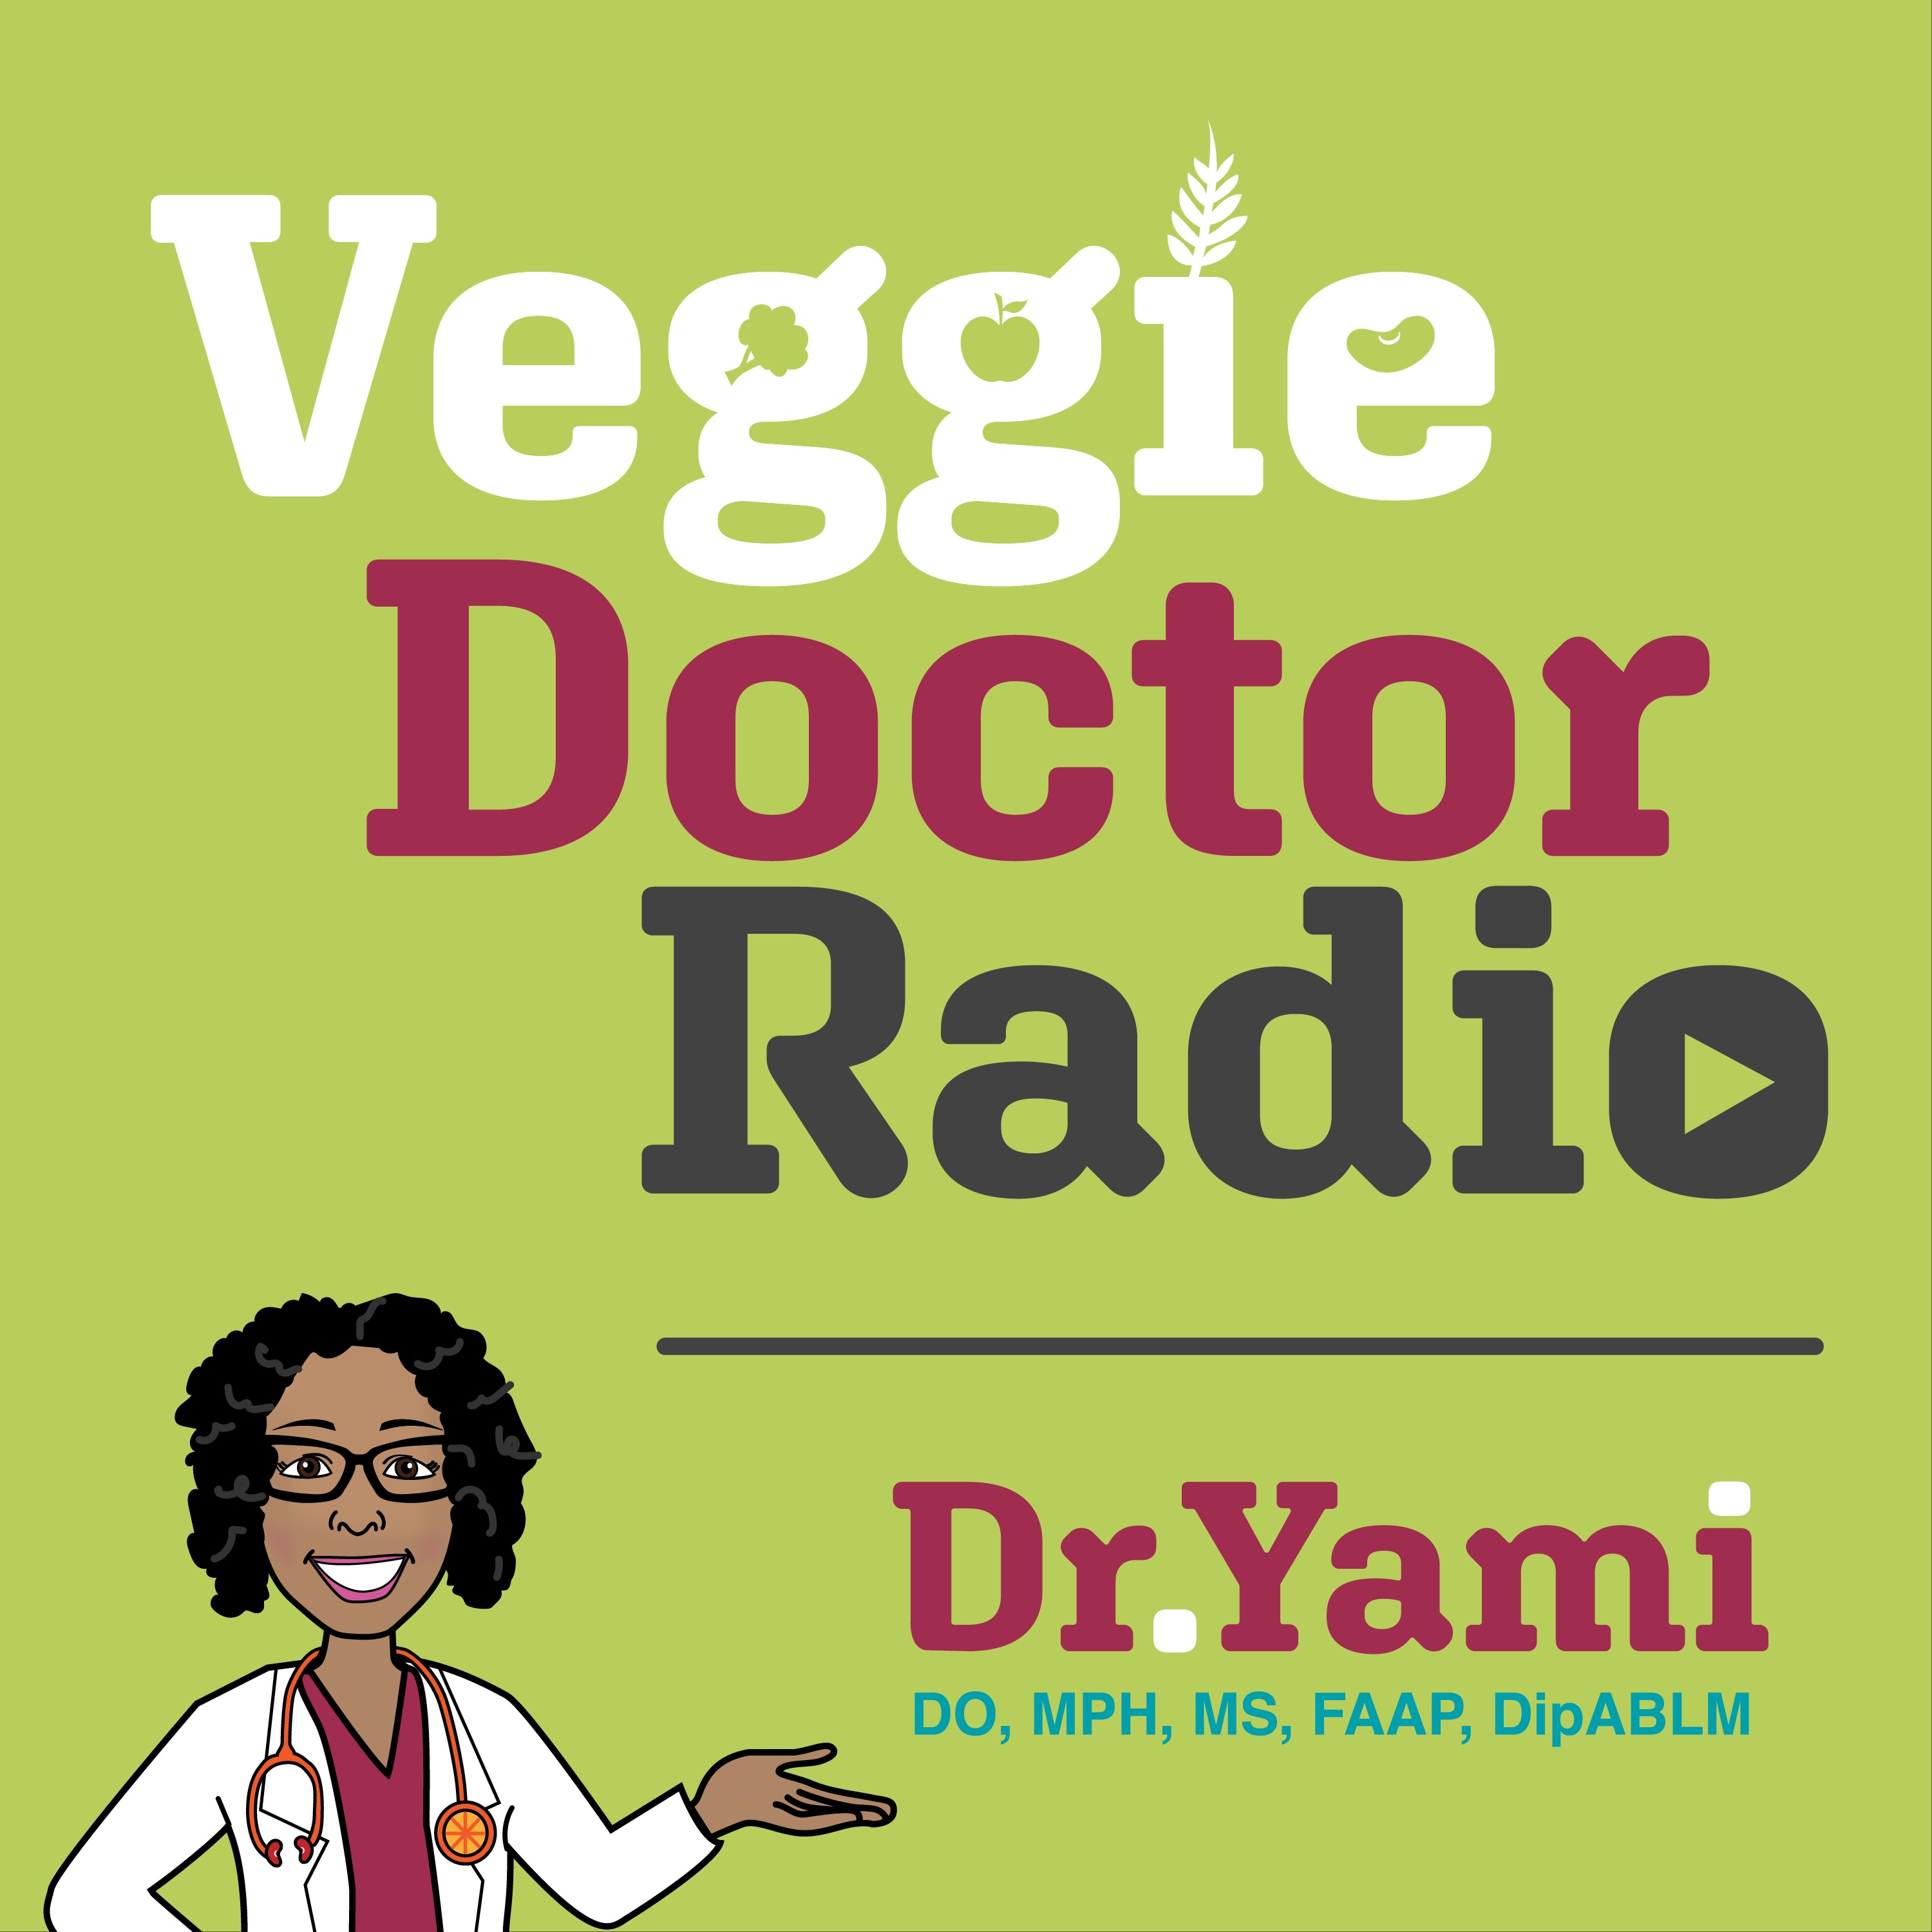 189: Spice Up Your Life with Antioxidants (Veggie Doctor Radio)